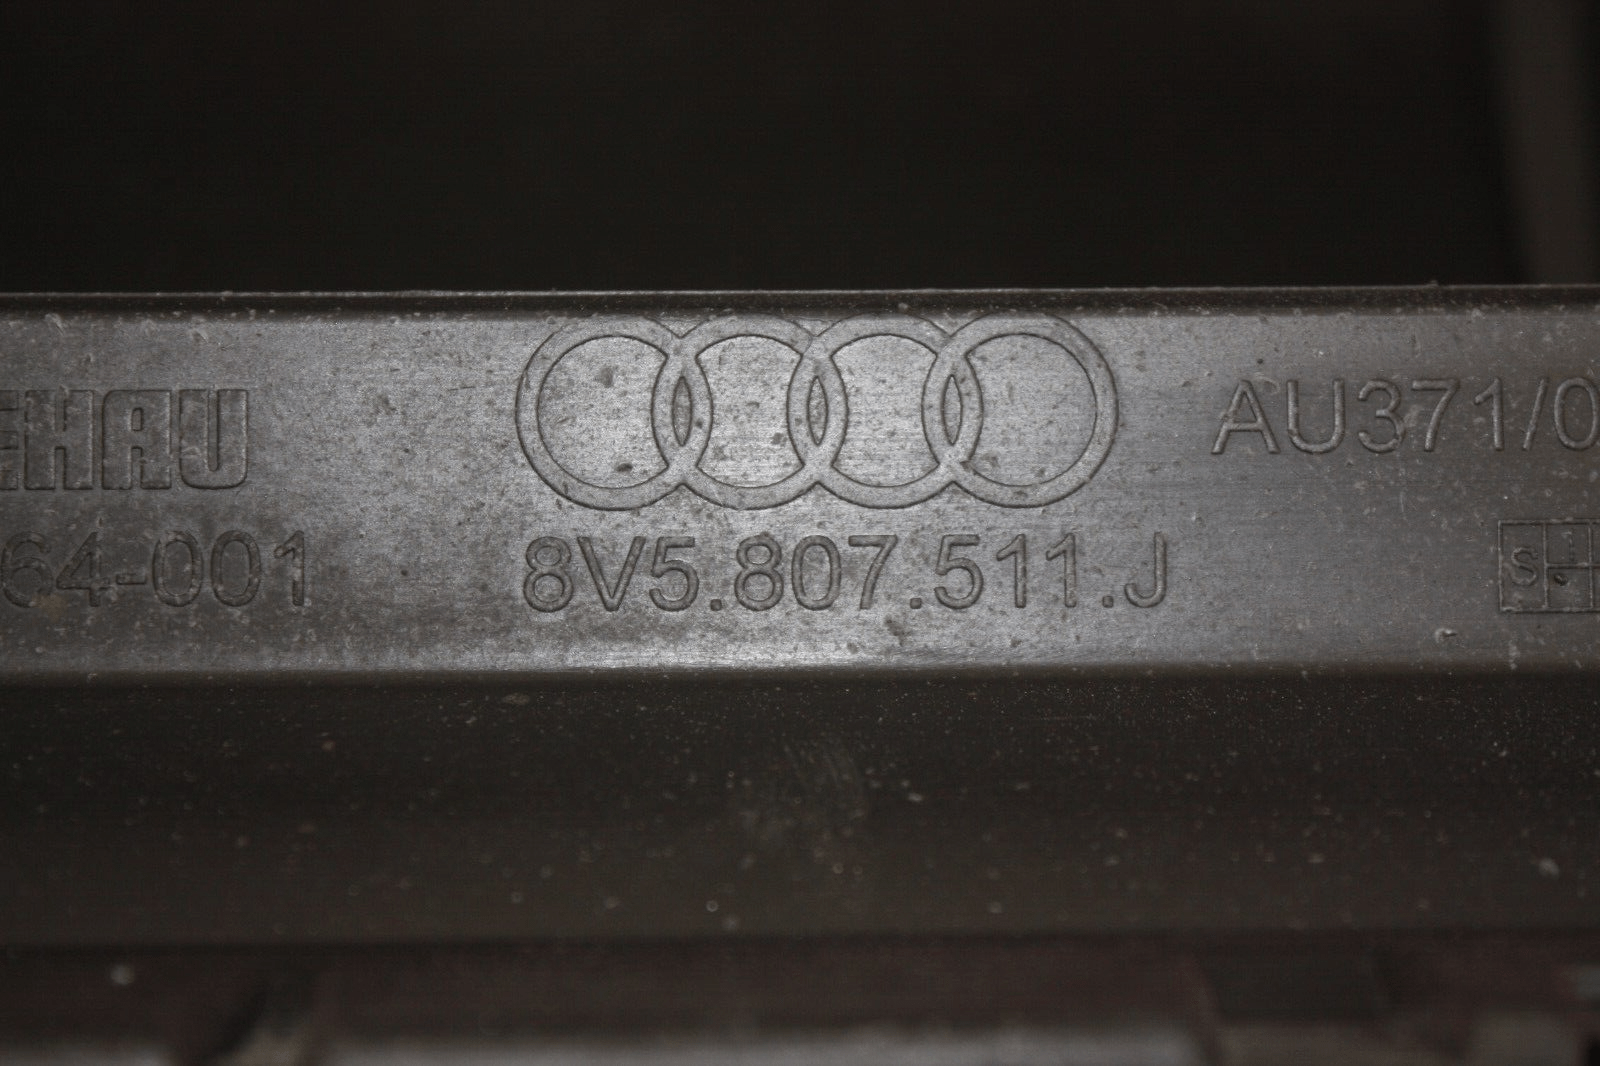 Audi-A3-S-line-S3-Rear-Bumper-2016-TO-2020-8V5807511J-Genuine-DAMAGED-176252825703-18